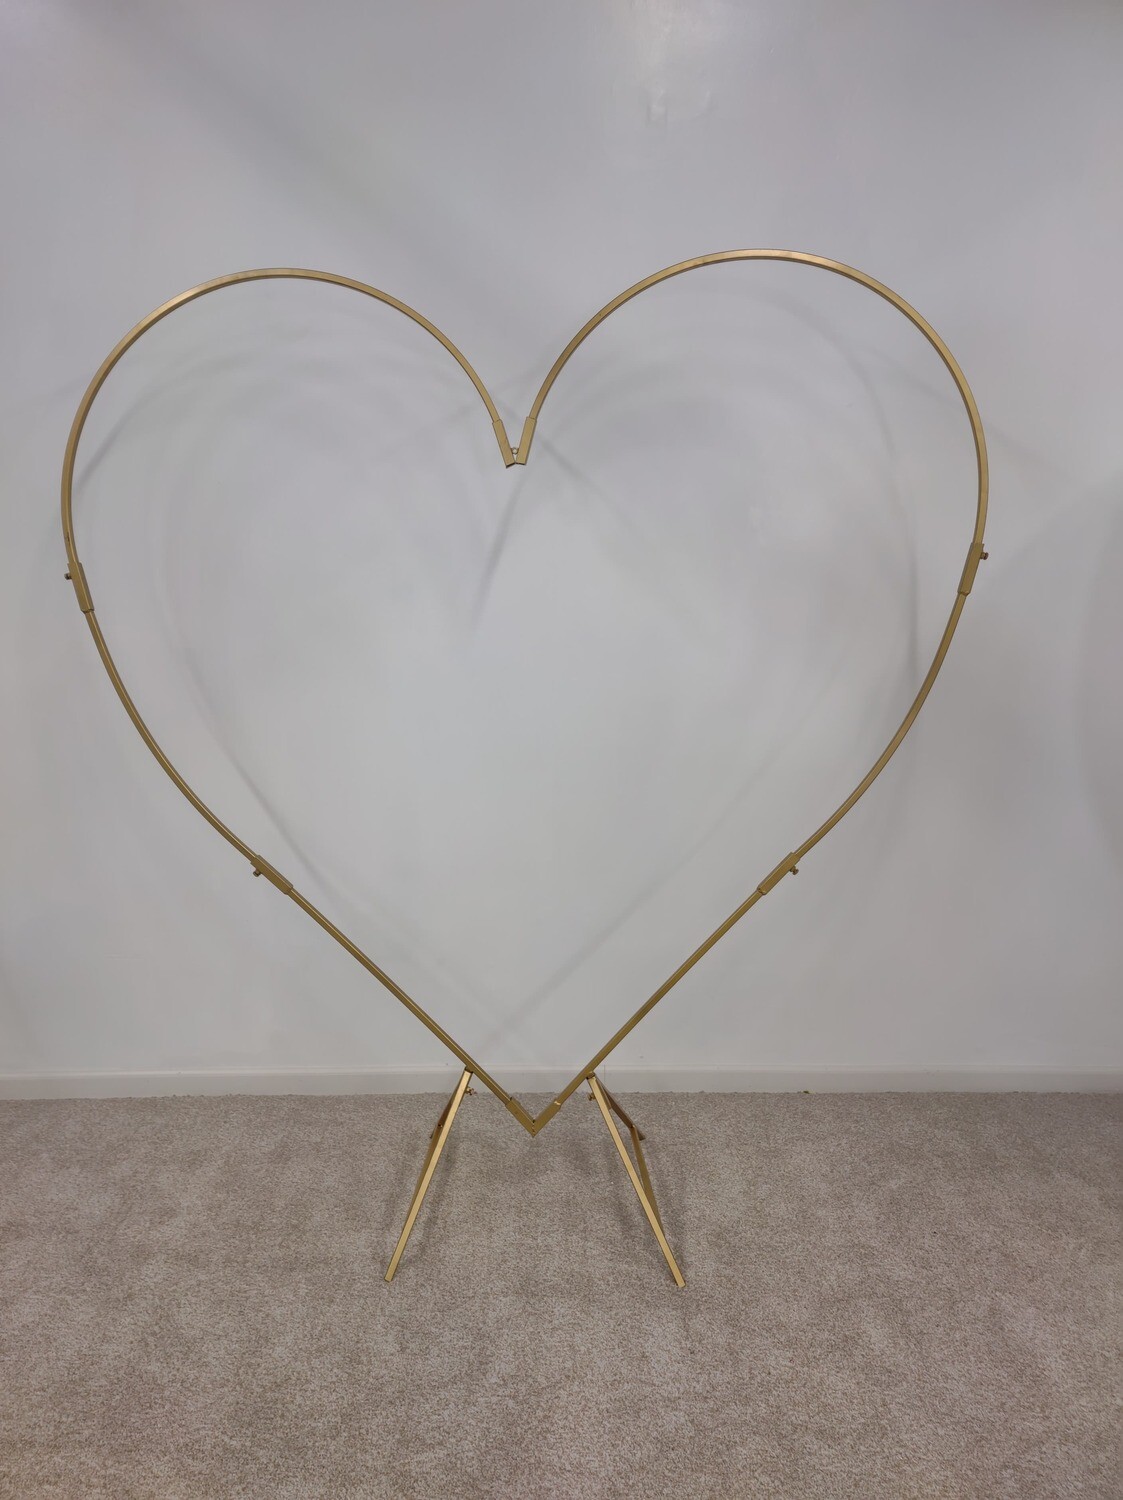 6 Foot Heart Frame Rental- Balloon Garland sold separately